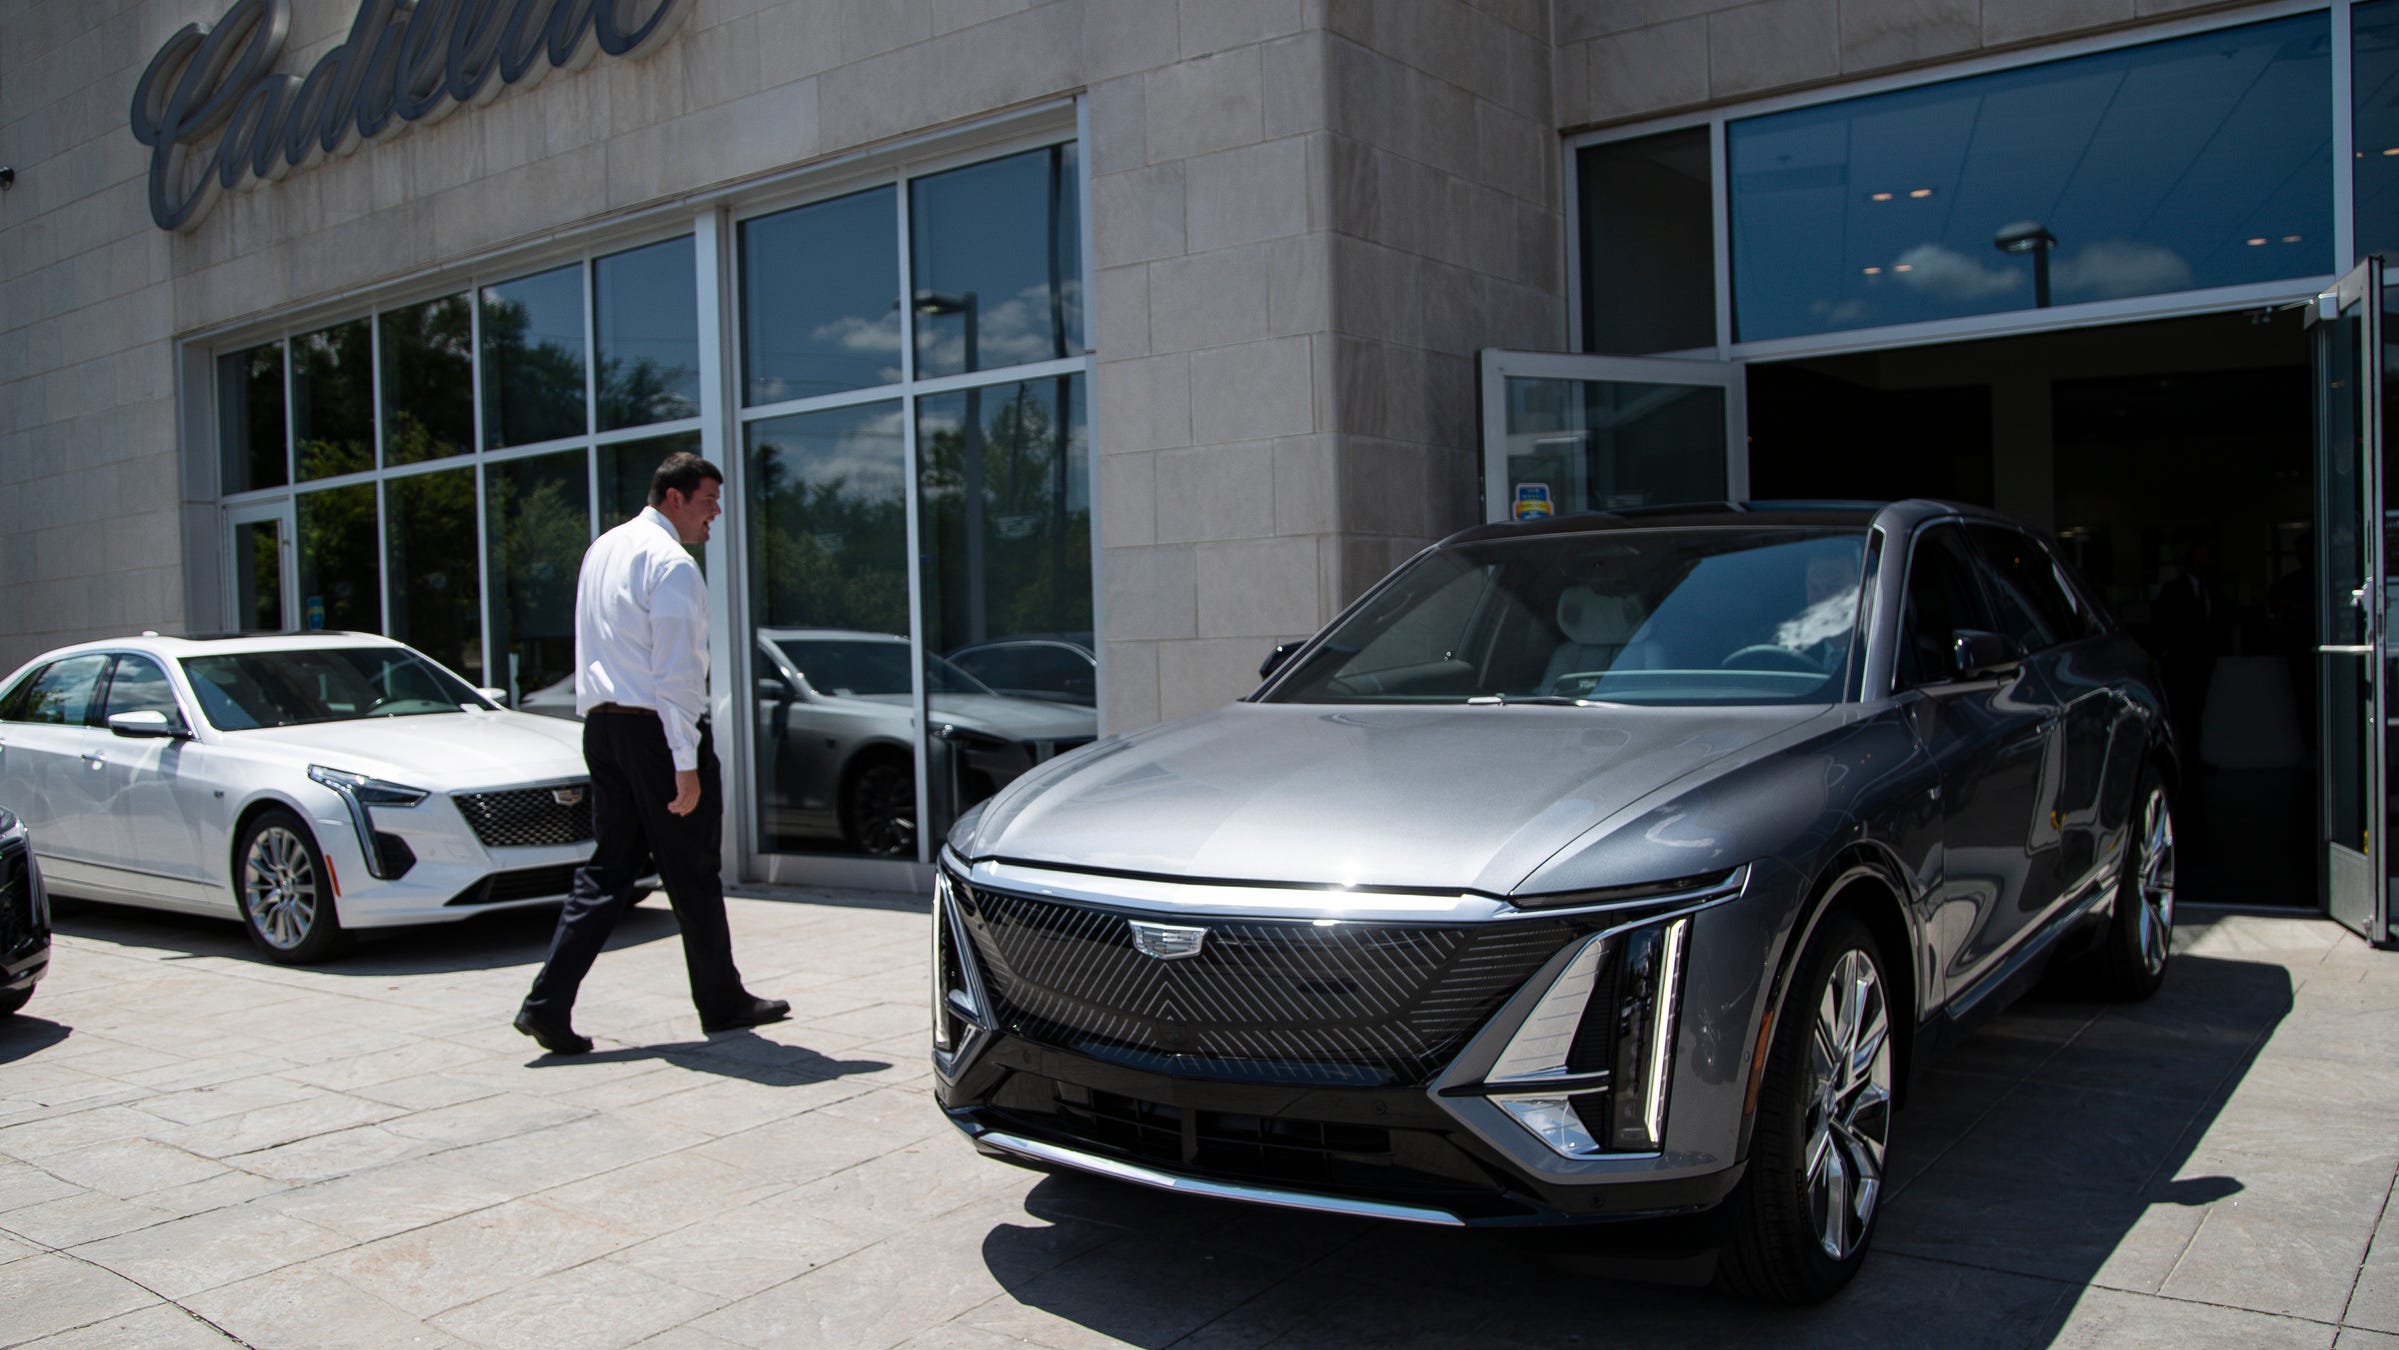 GM Rebate On New Cadillac Lyriq If Drivers Sign NDA Agree To Tracking